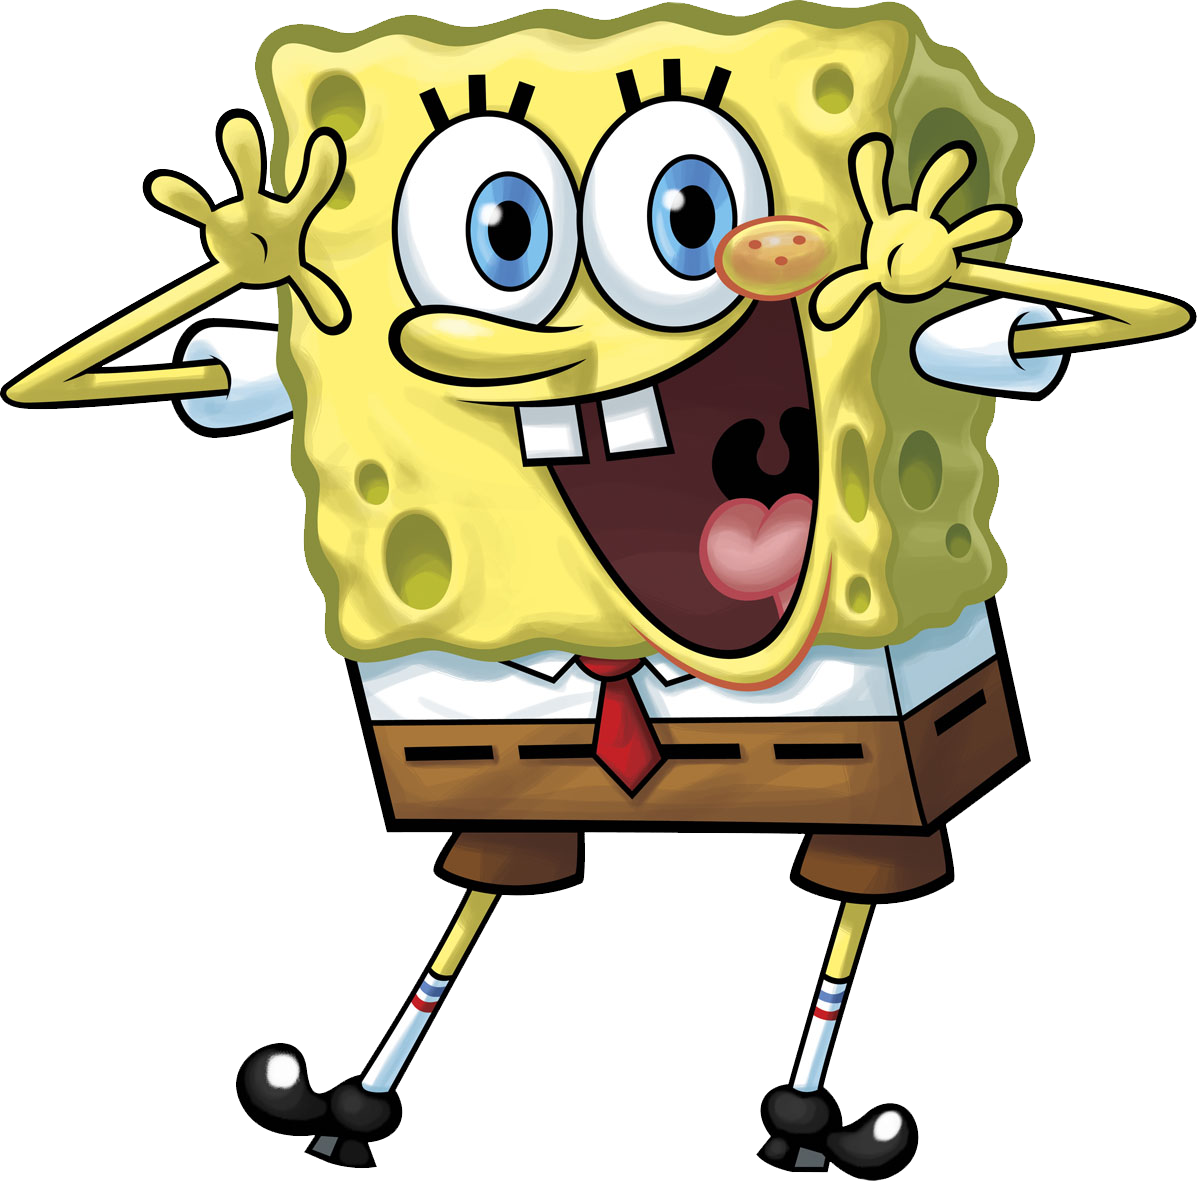 clipart about Spongebob - Spongebob Squarepants Beach Towel, Find more high...